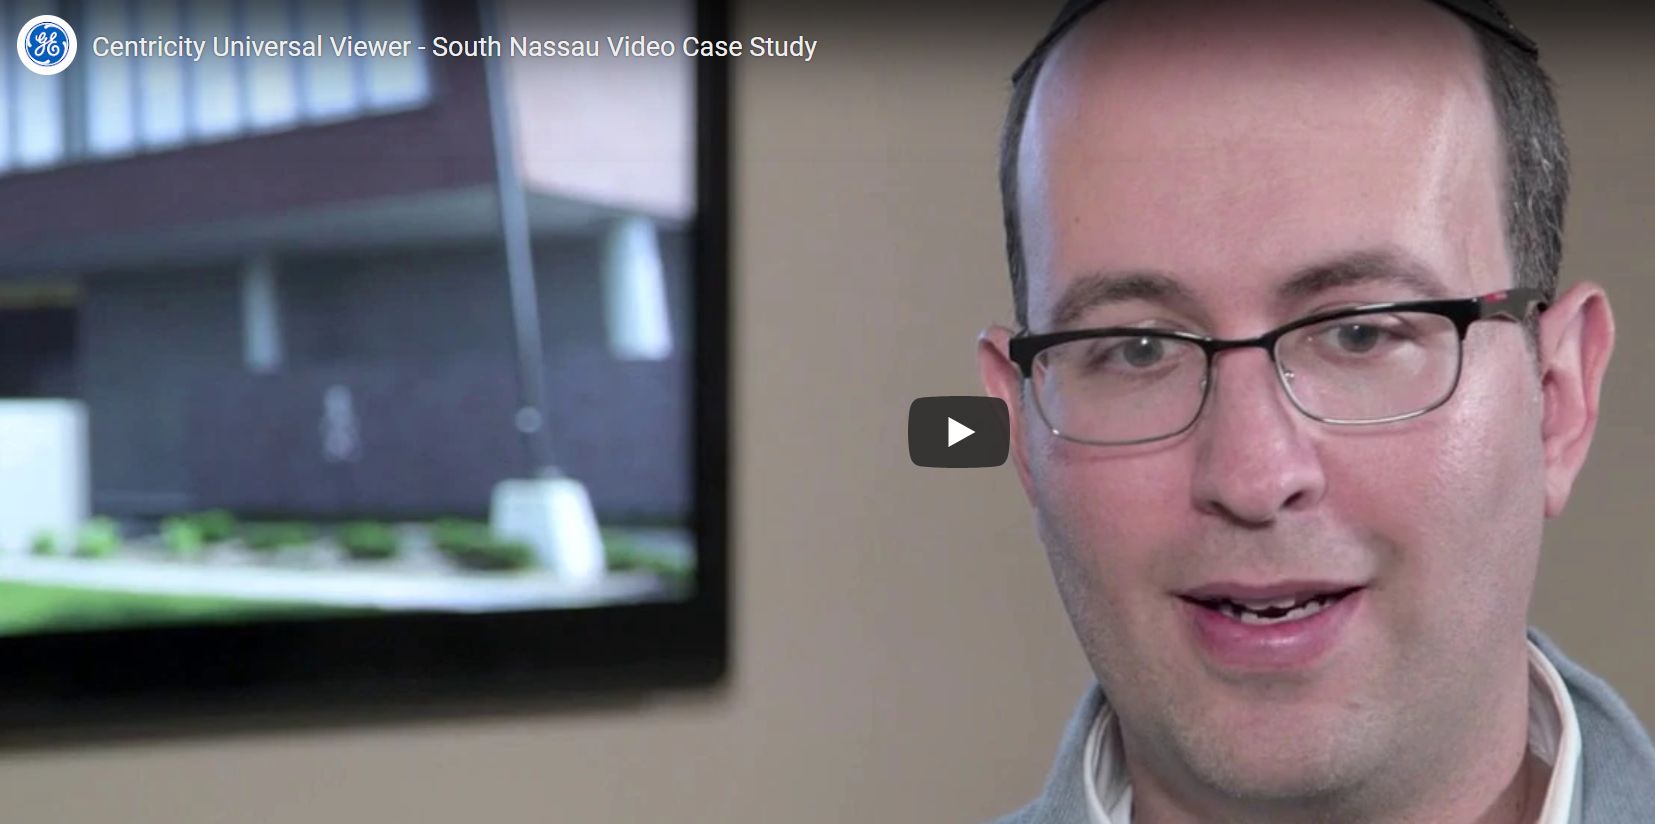 South Nassau Video Case Study Cover - South Nassau Video Case Study